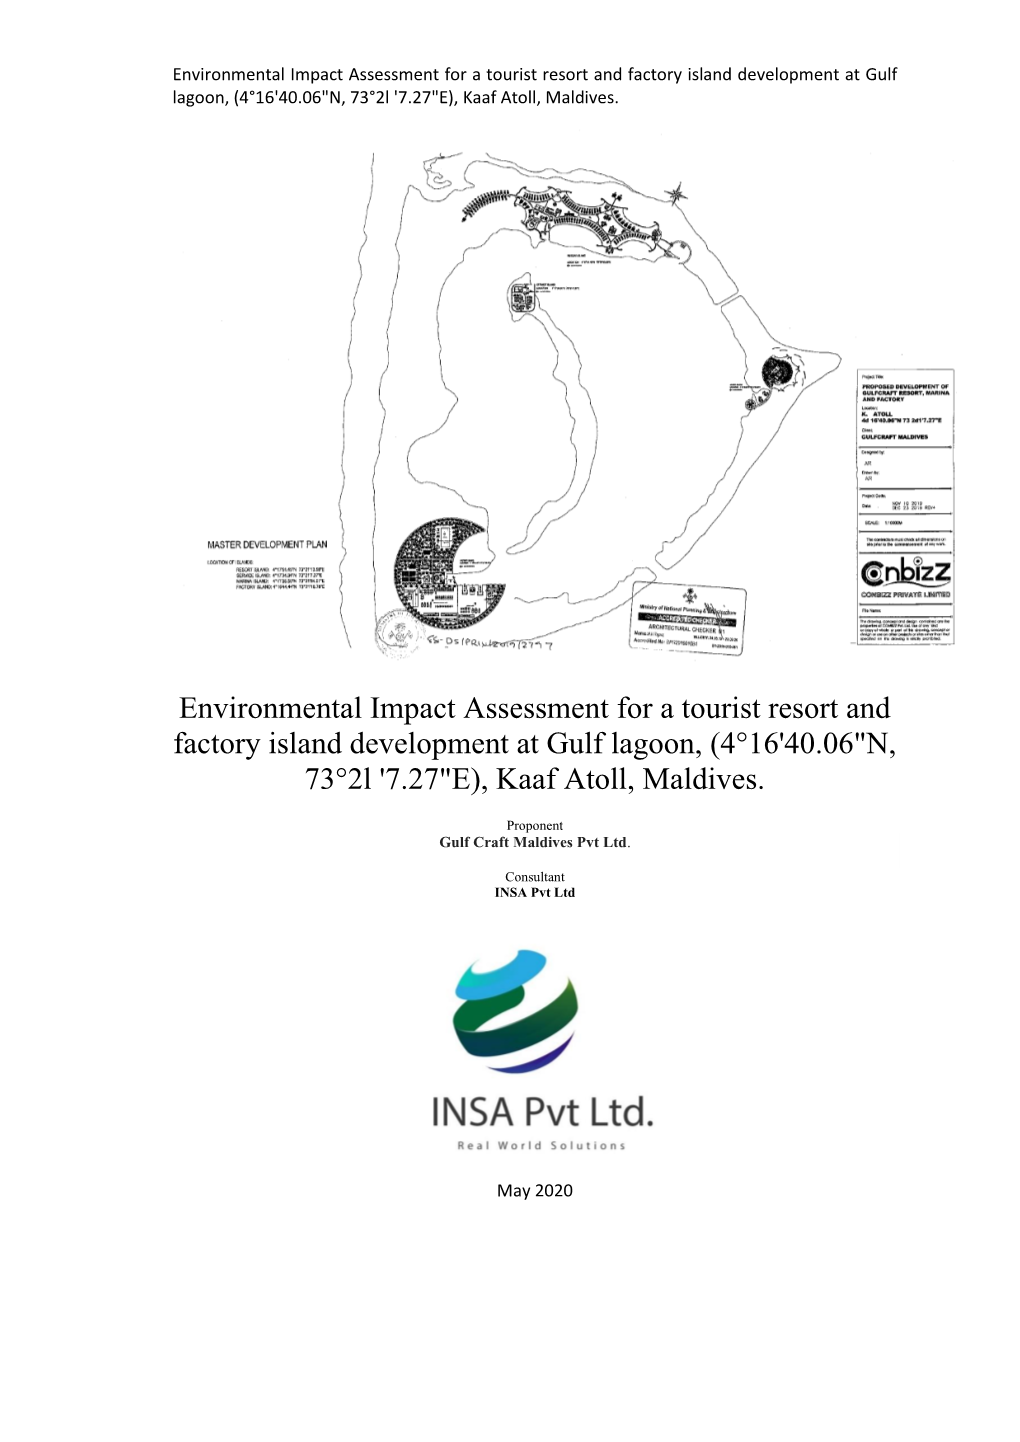 Environmental Impact Assessment for a Tourist Resort and Factory Island Development at Gulf Lagoon, (4°16'40.06"N, 73°2L '7.27"E), Kaaf Atoll, Maldives